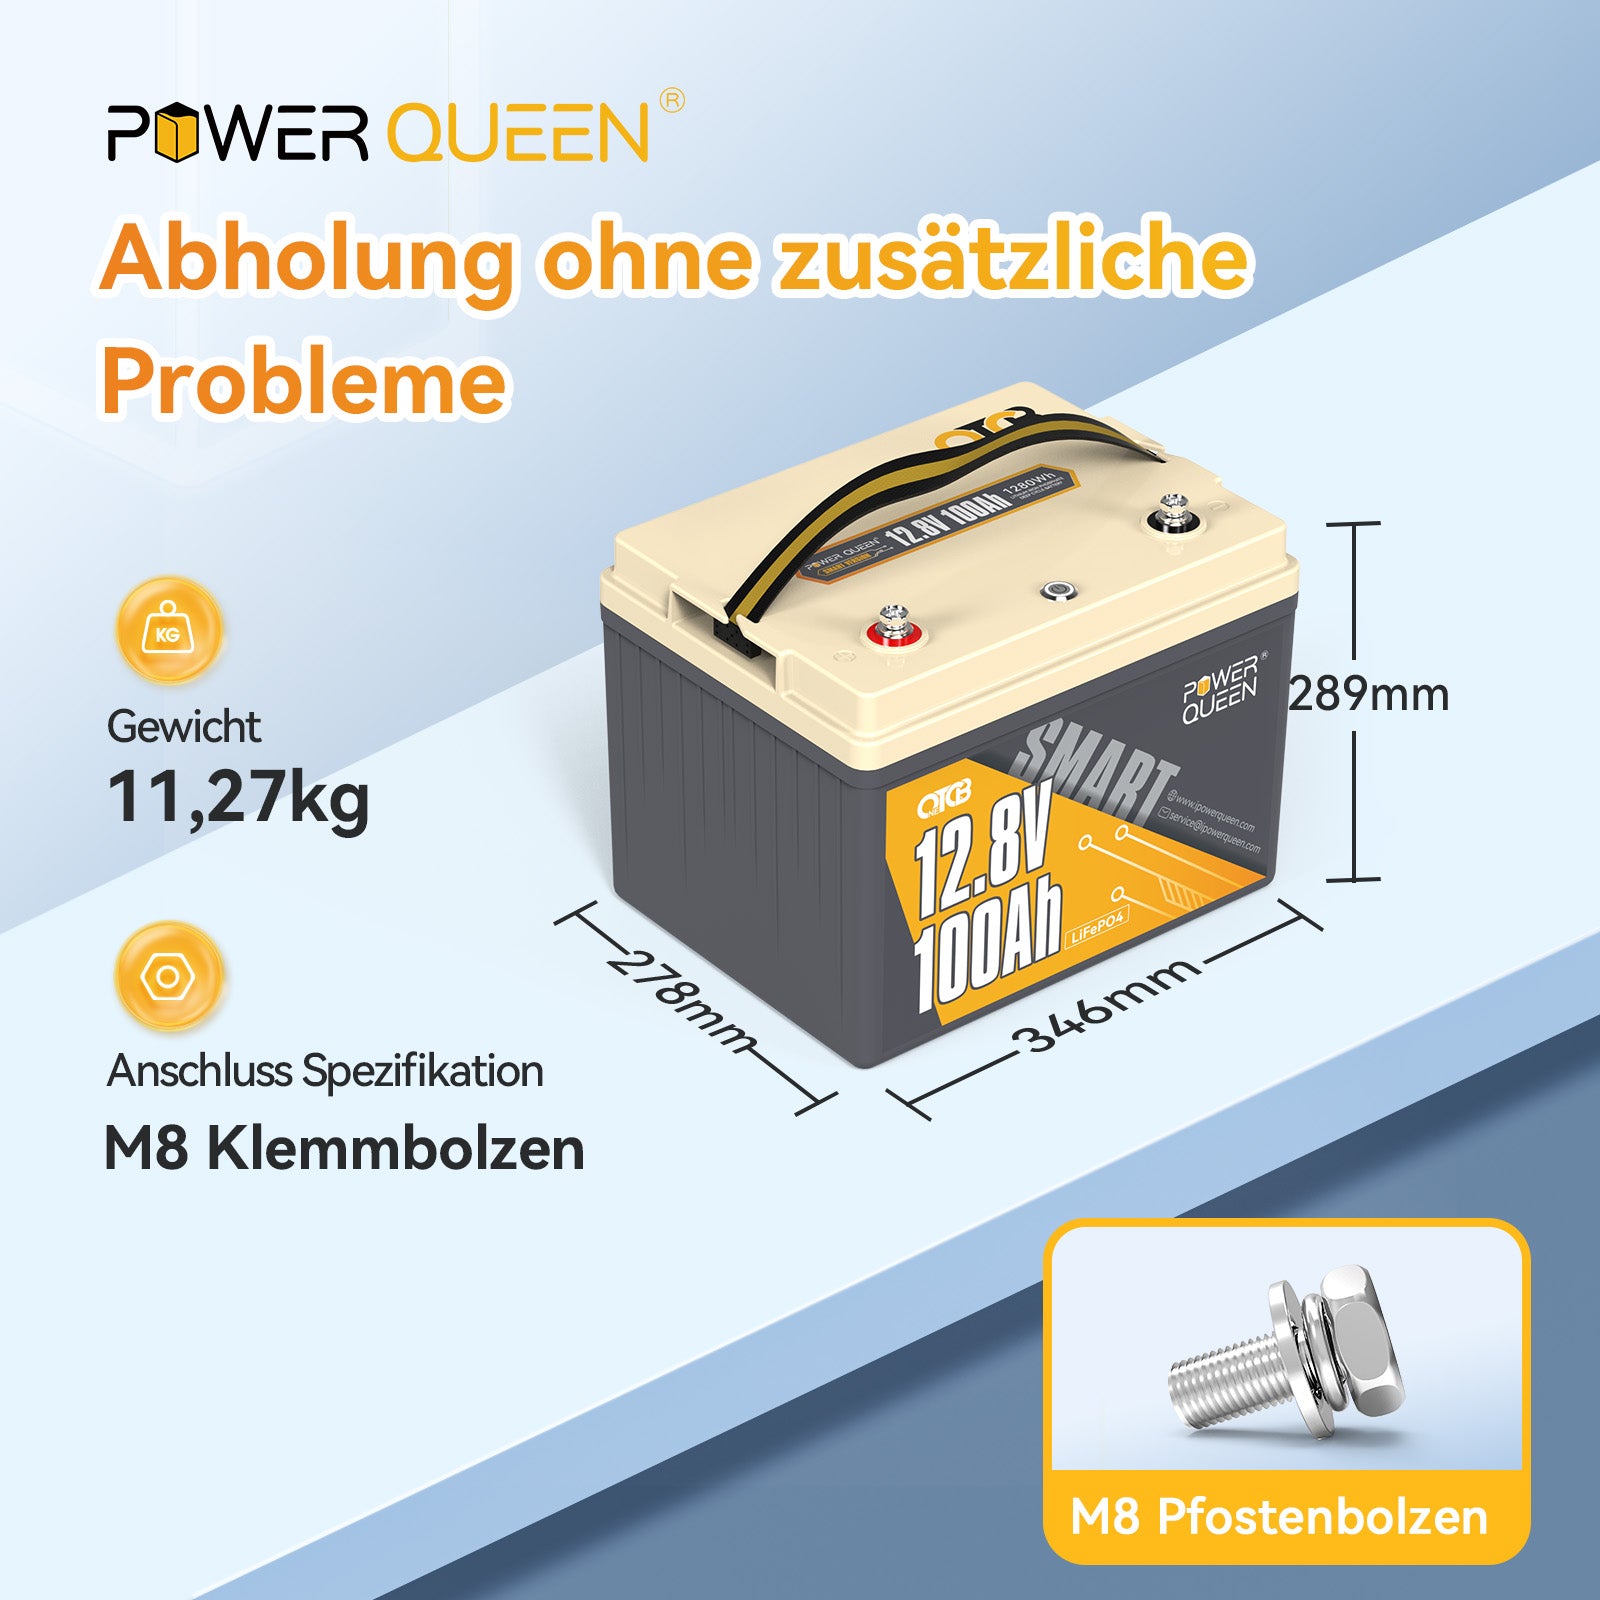 【0% IVA】Batteria Power Queen 12,8 V 100 Ah OTCB Smart LiFePO4, BMS 100 A integrato